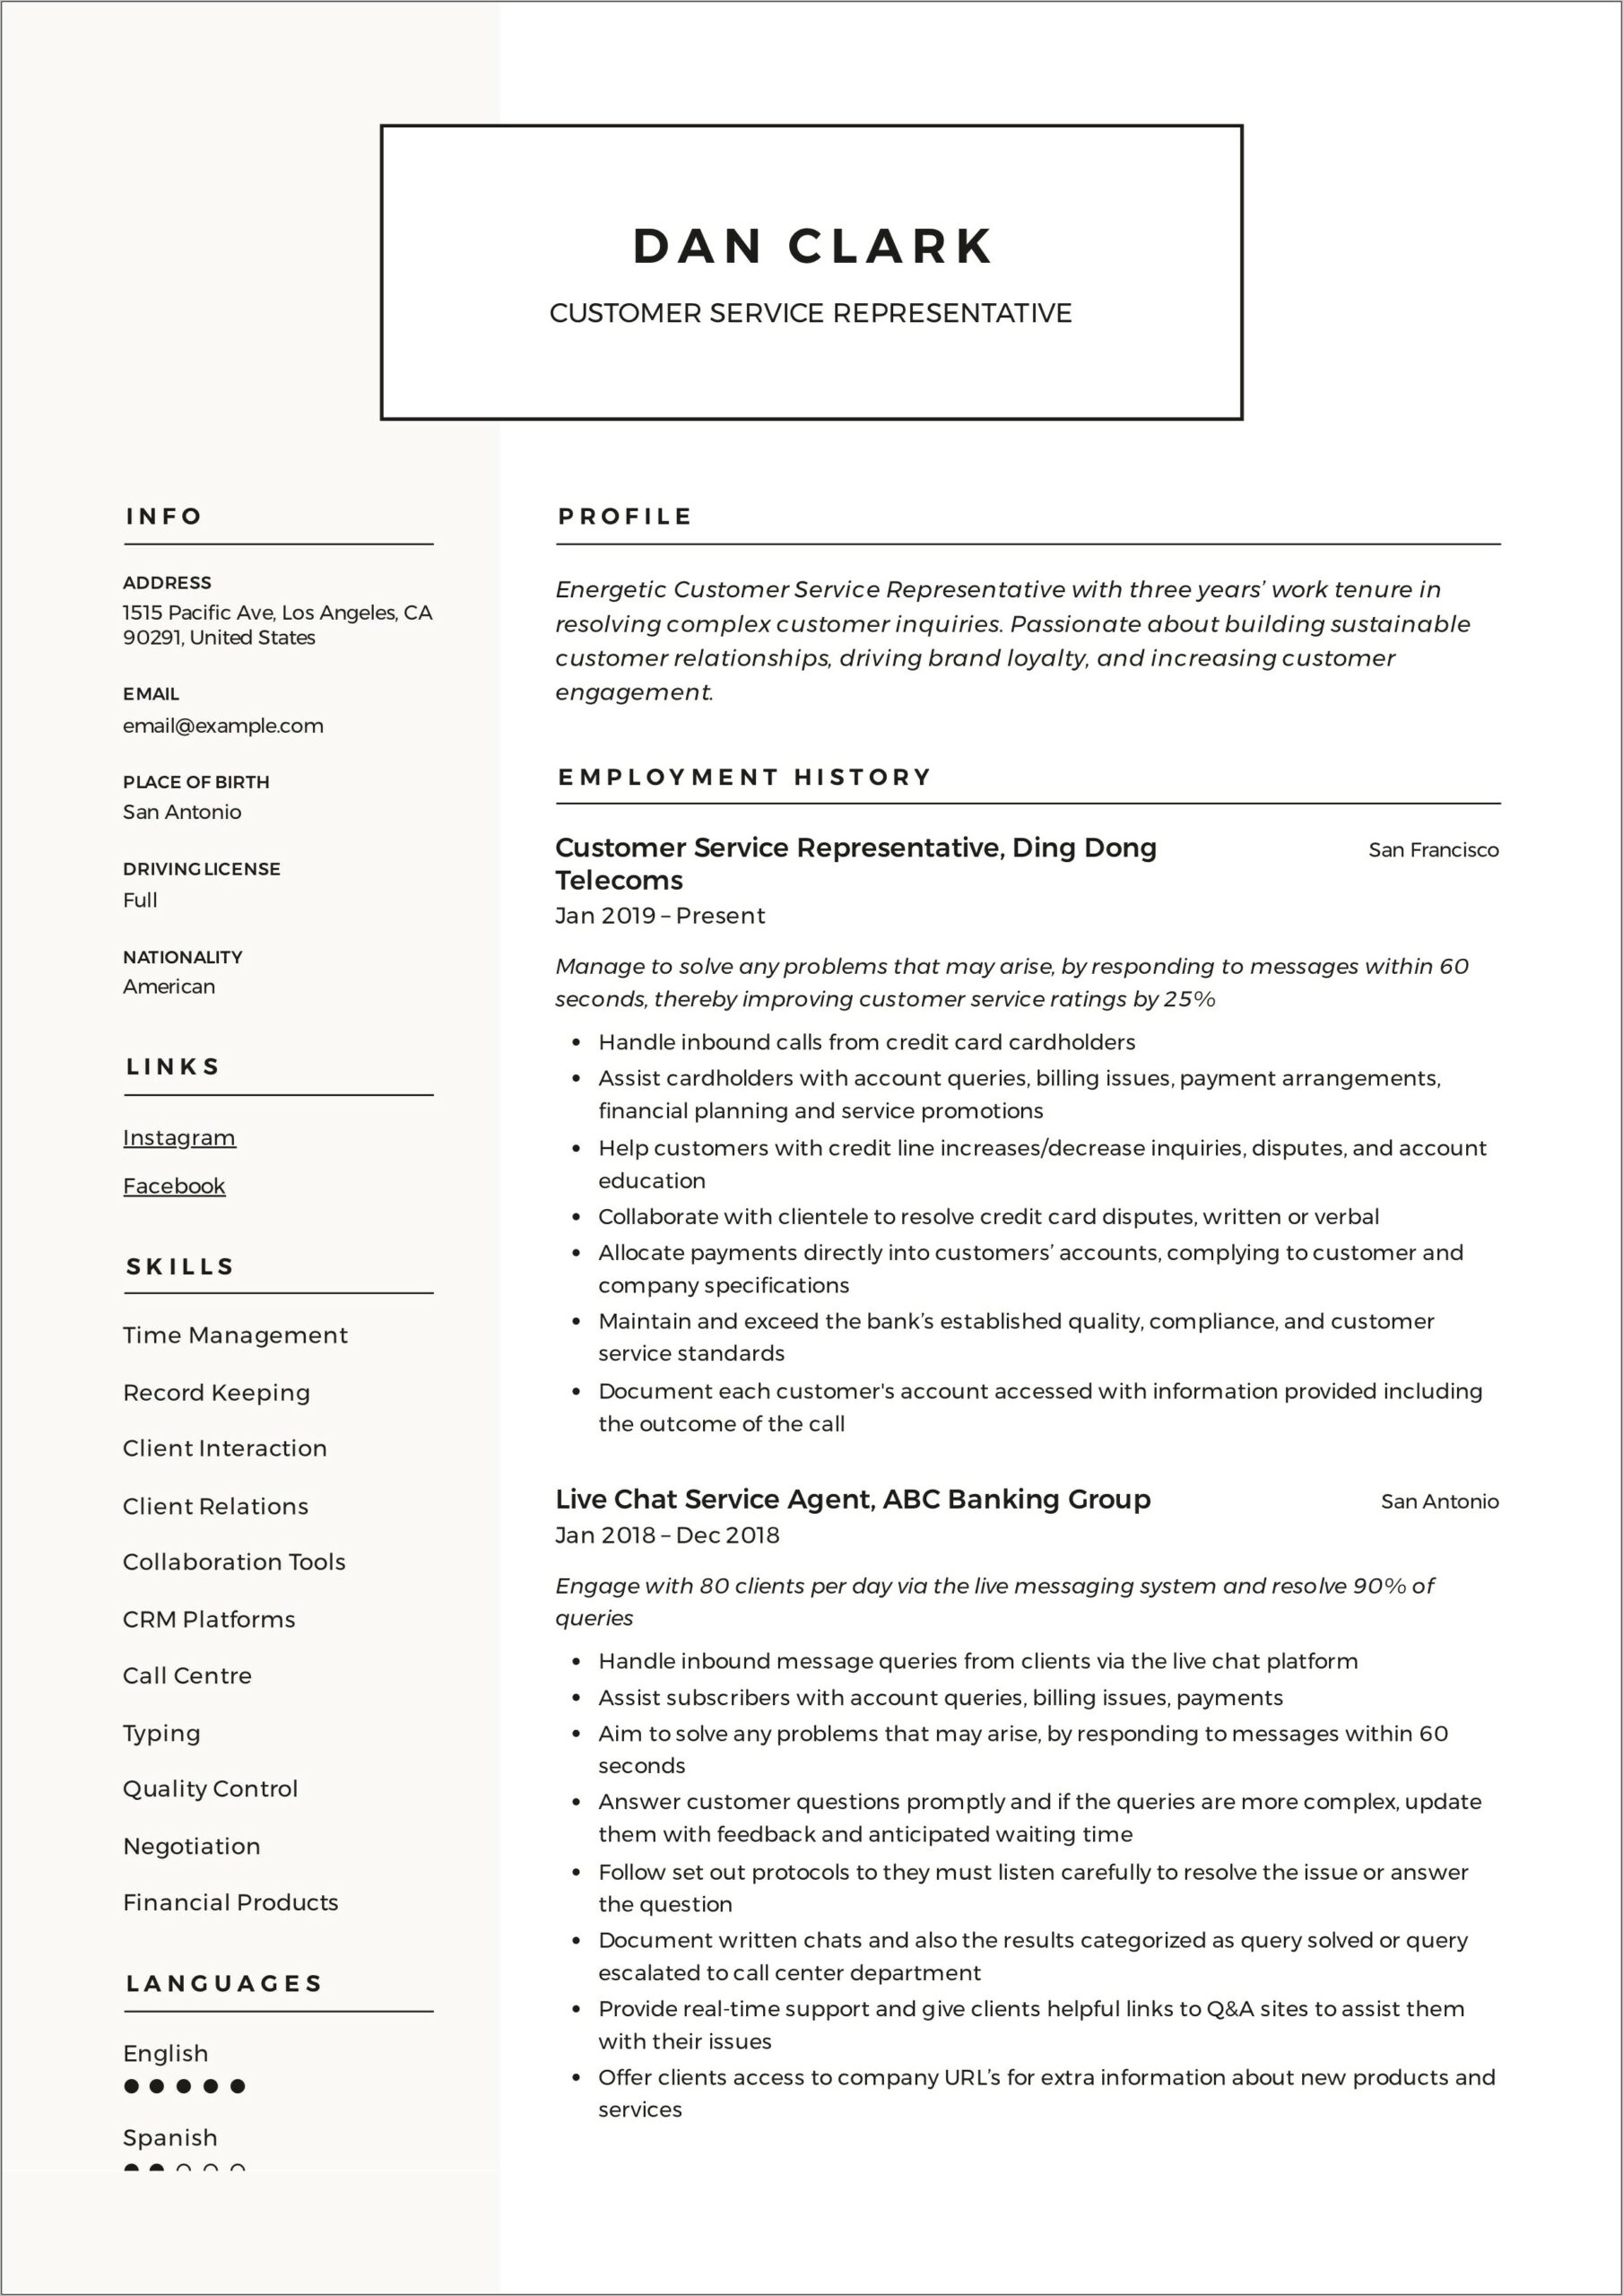 Customer Service Representative Job Responsibilities Resume